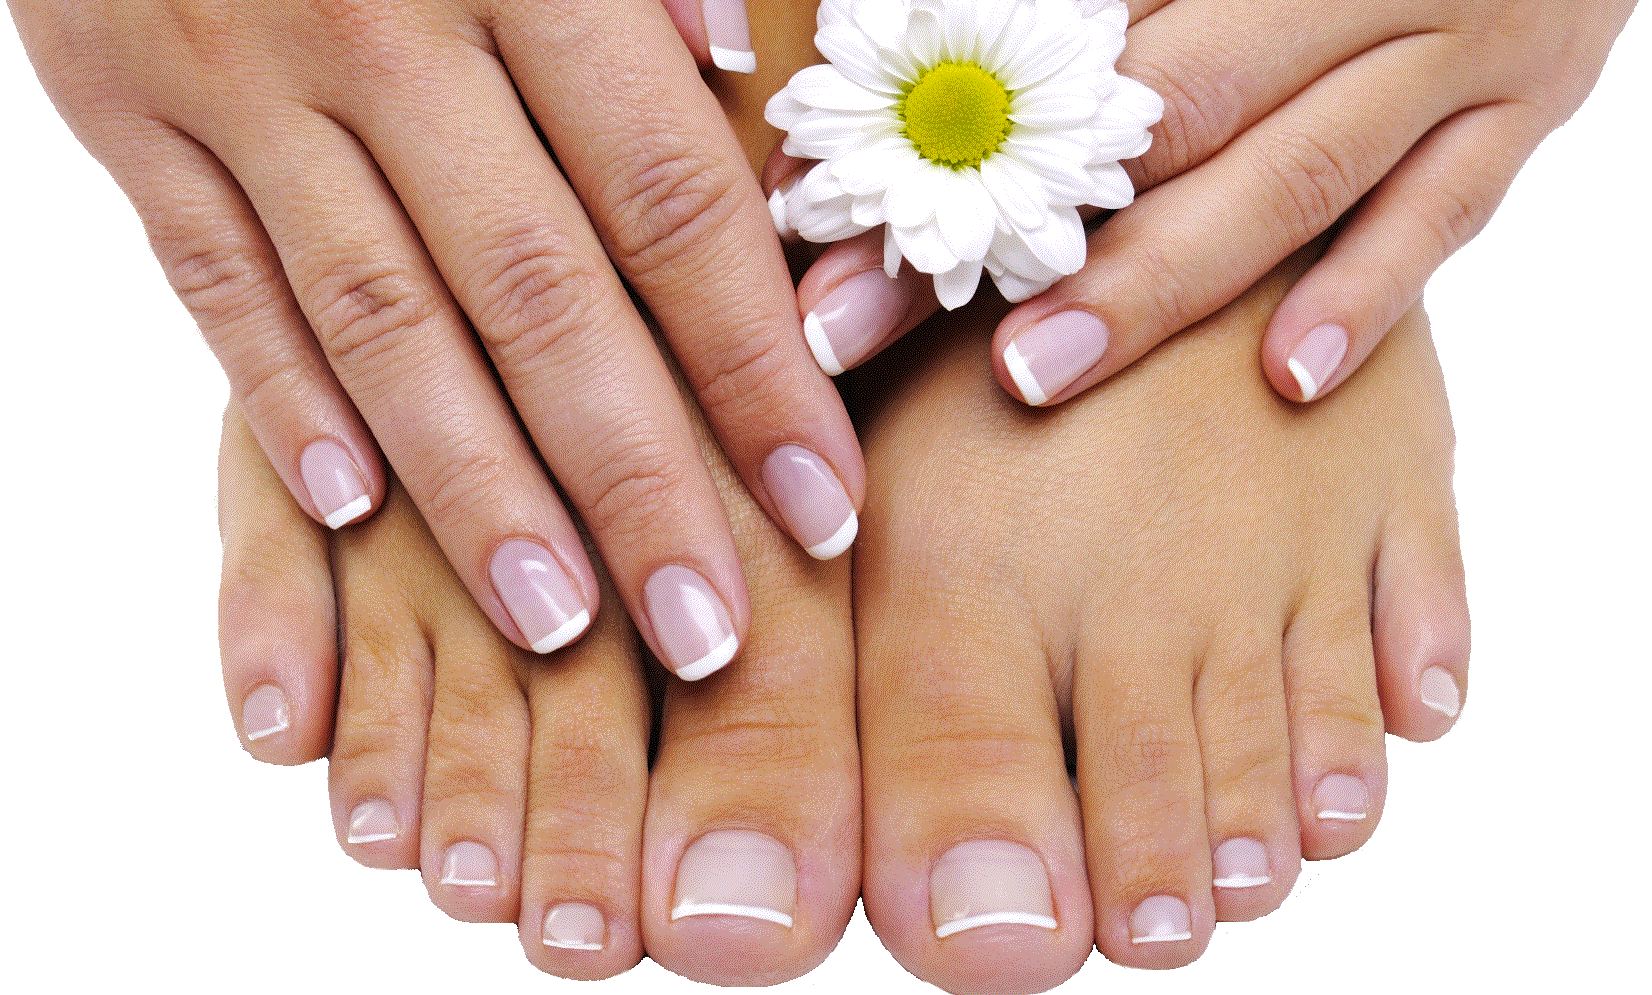 Kisspng Foot Pedicure Manicure Gel Nails Pedicure 5acb24a159b976 - Gel Nail Pedicure Clipart (1652x995), Png Download